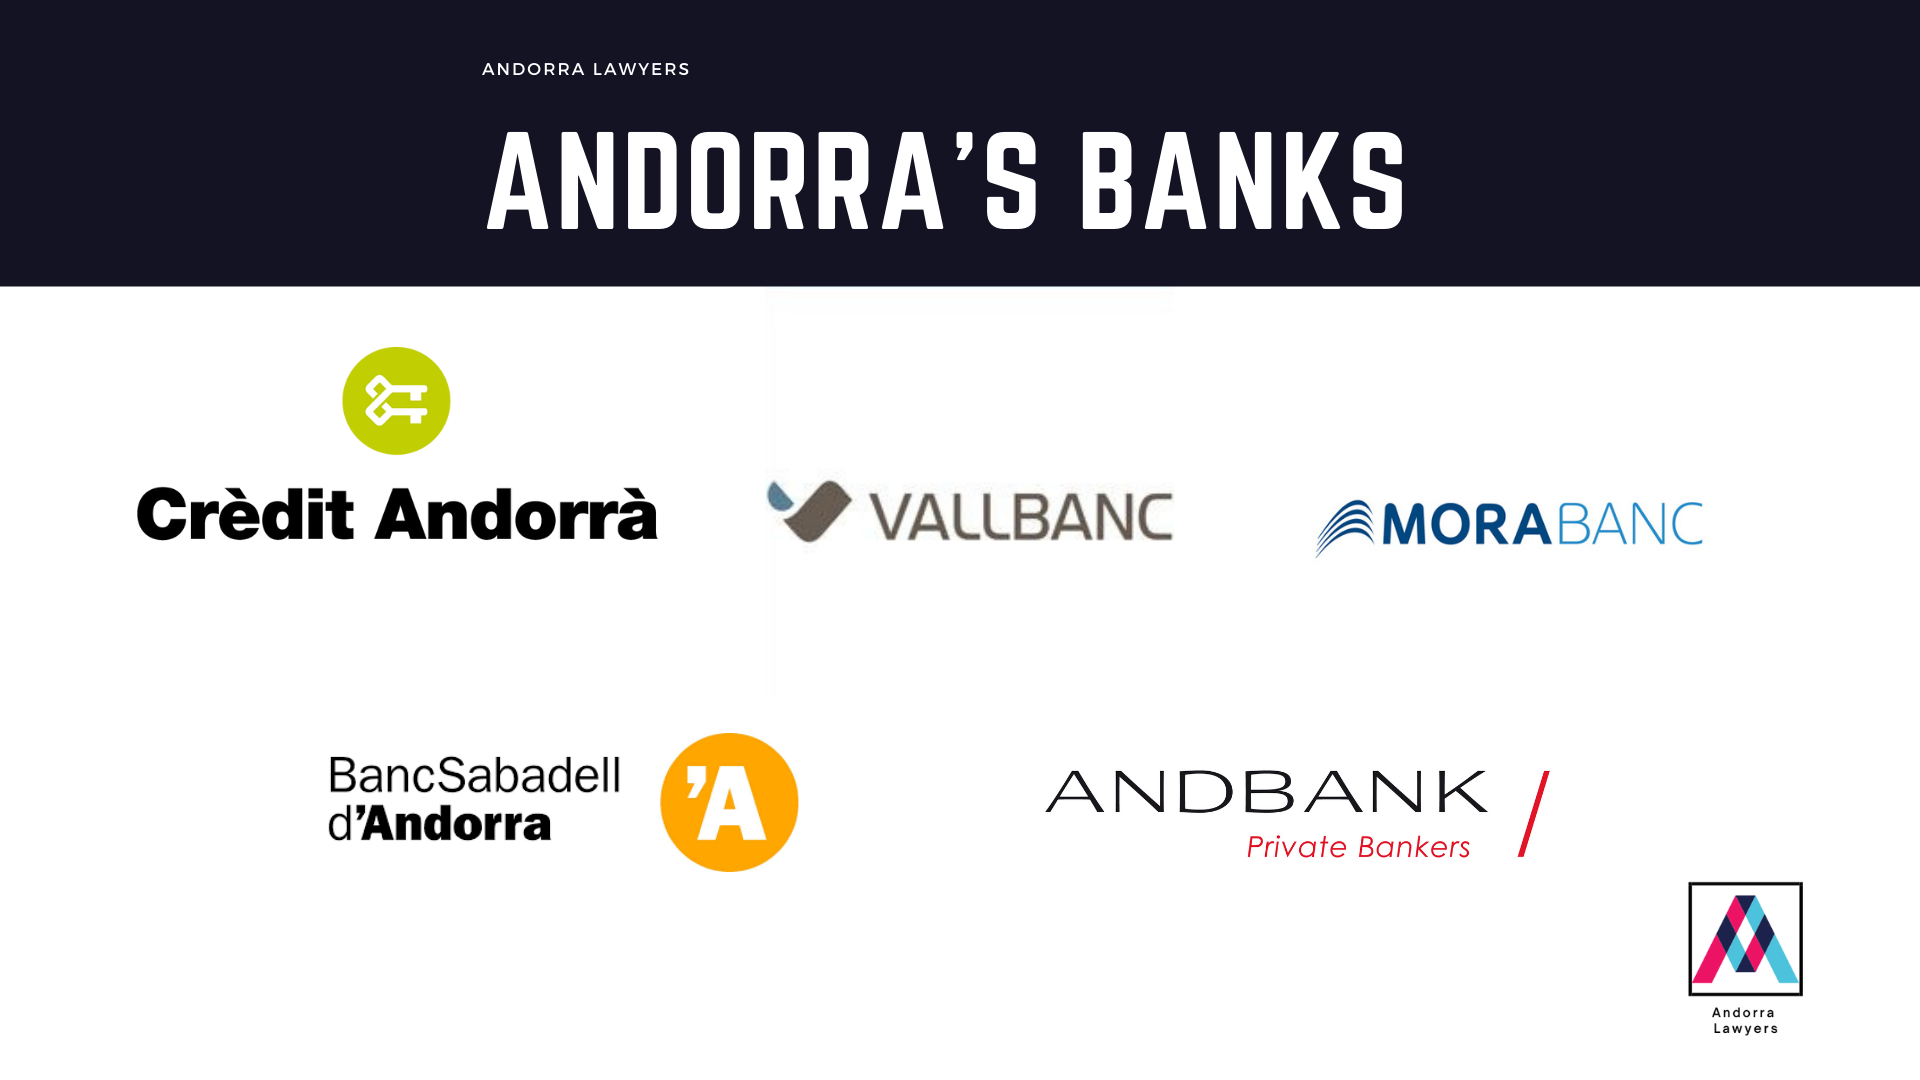 BANKS IN ANDORRA